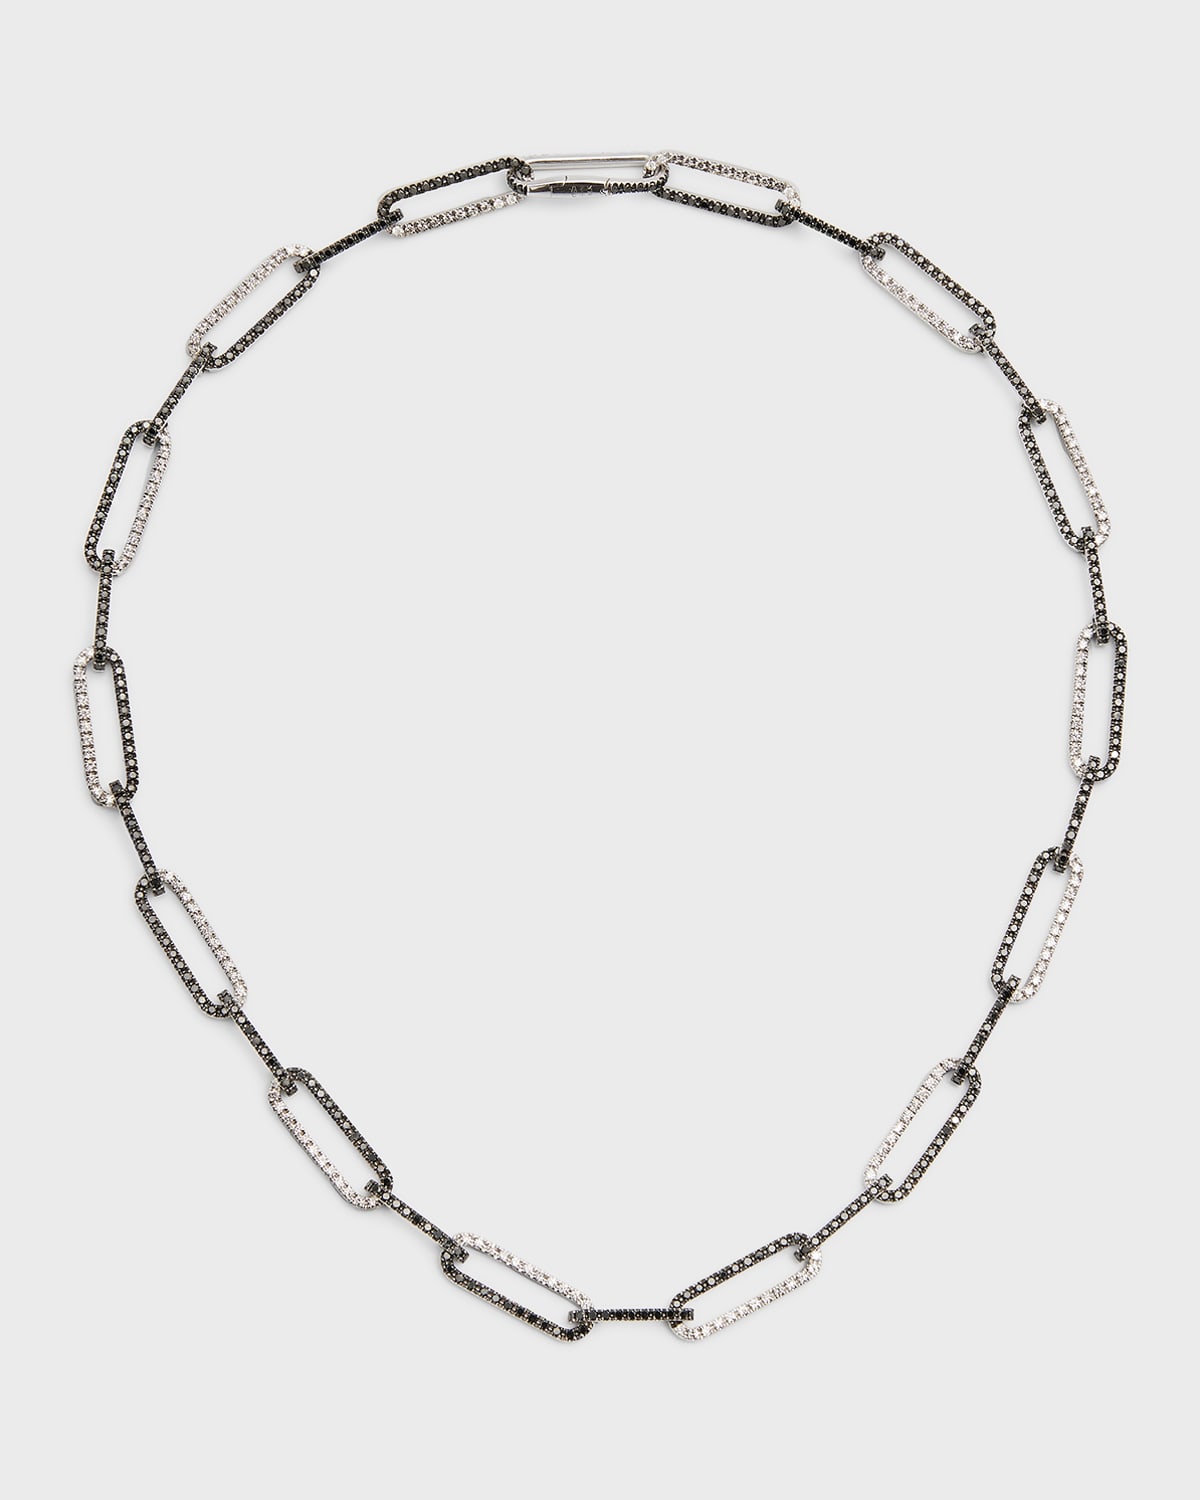 18K White Gold Black and White Diamond Necklace, 16"L